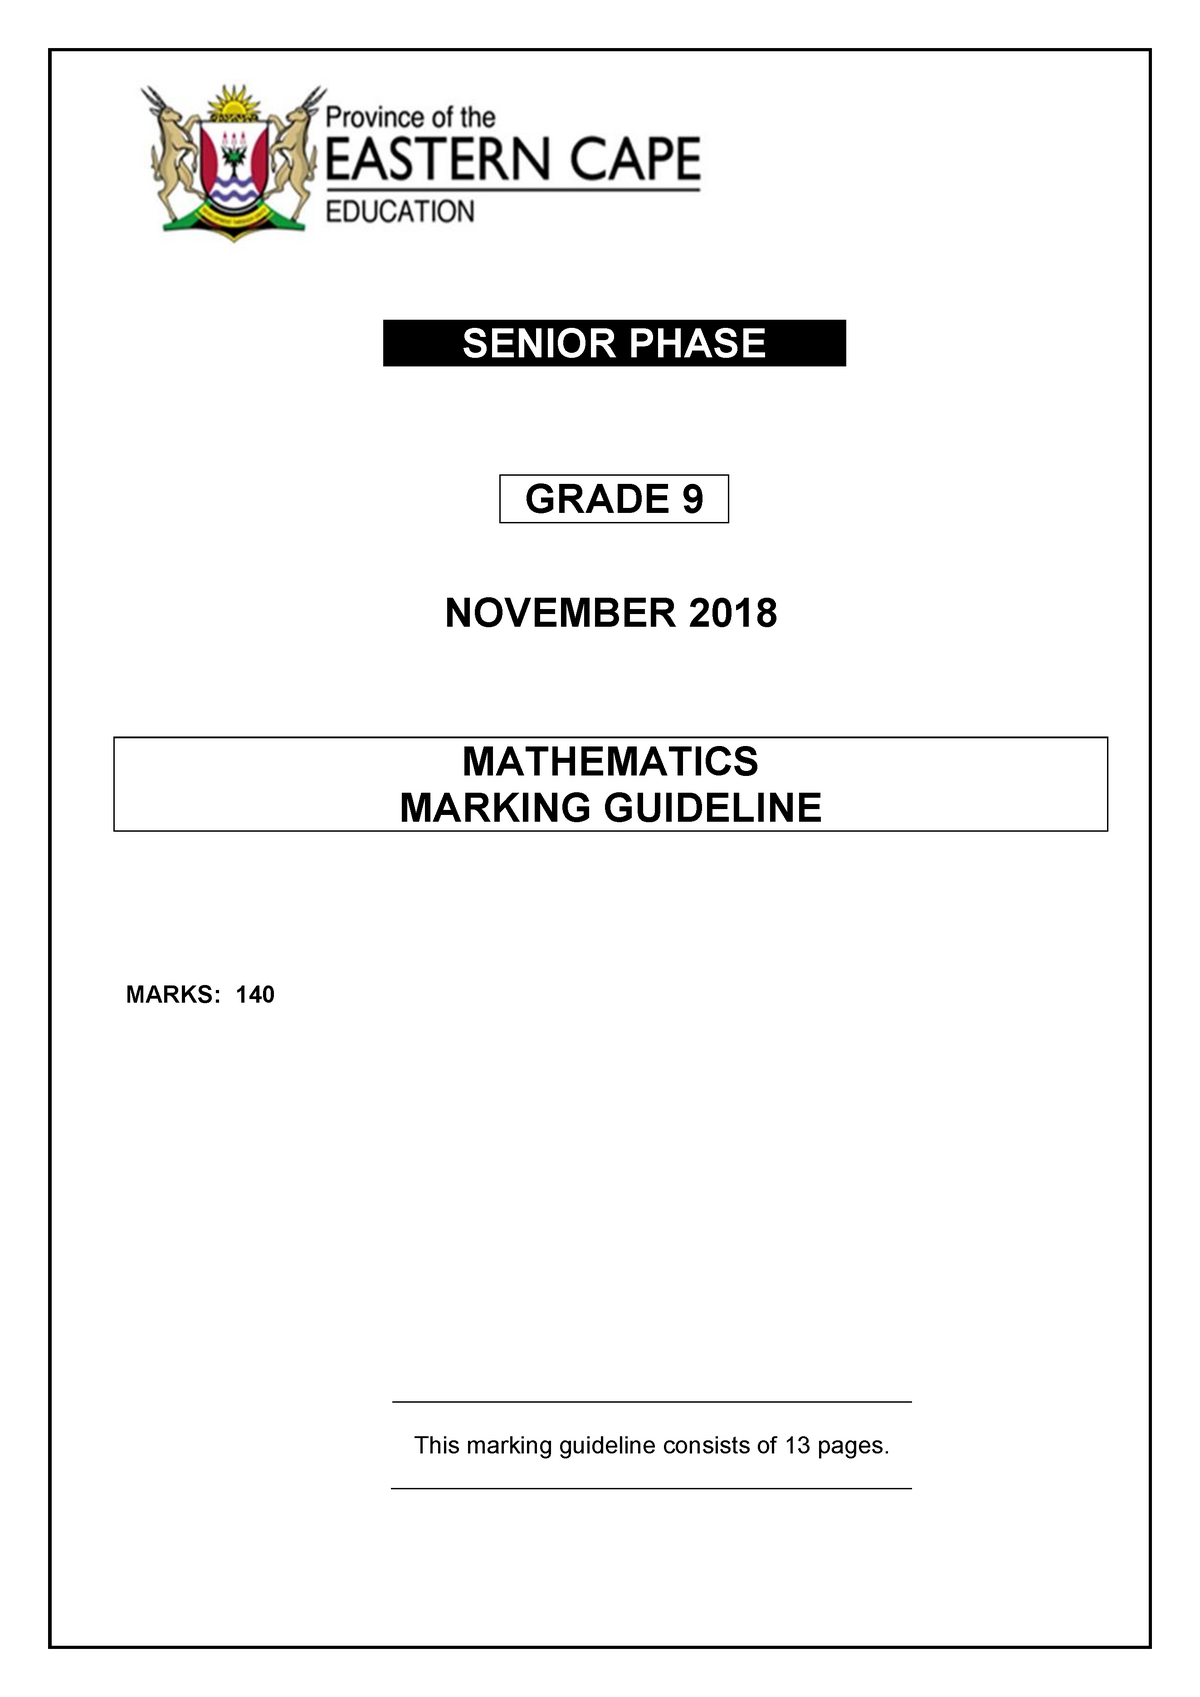 grade 9 assignment term 1 2021